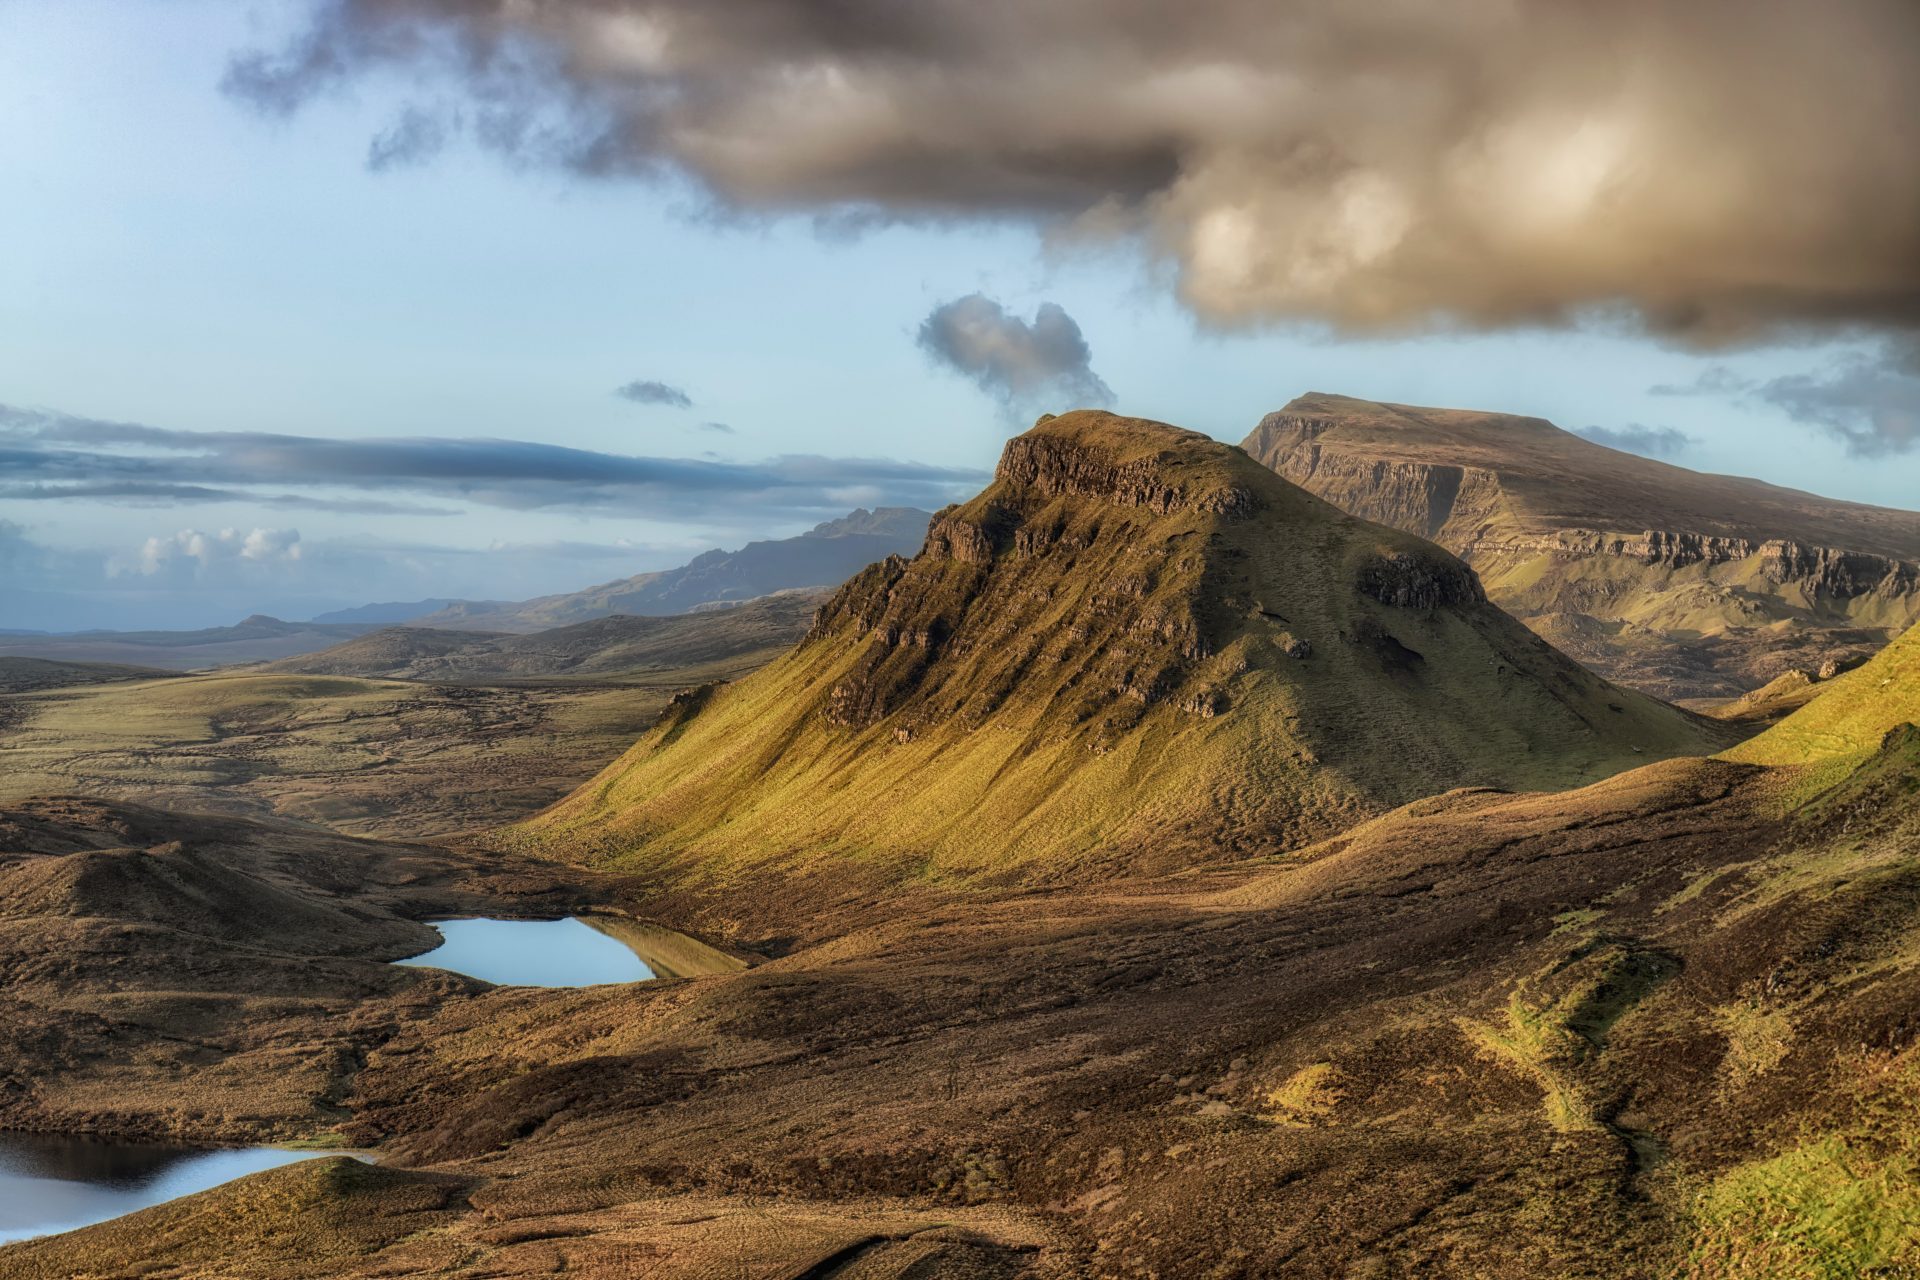 Scotland's landscape